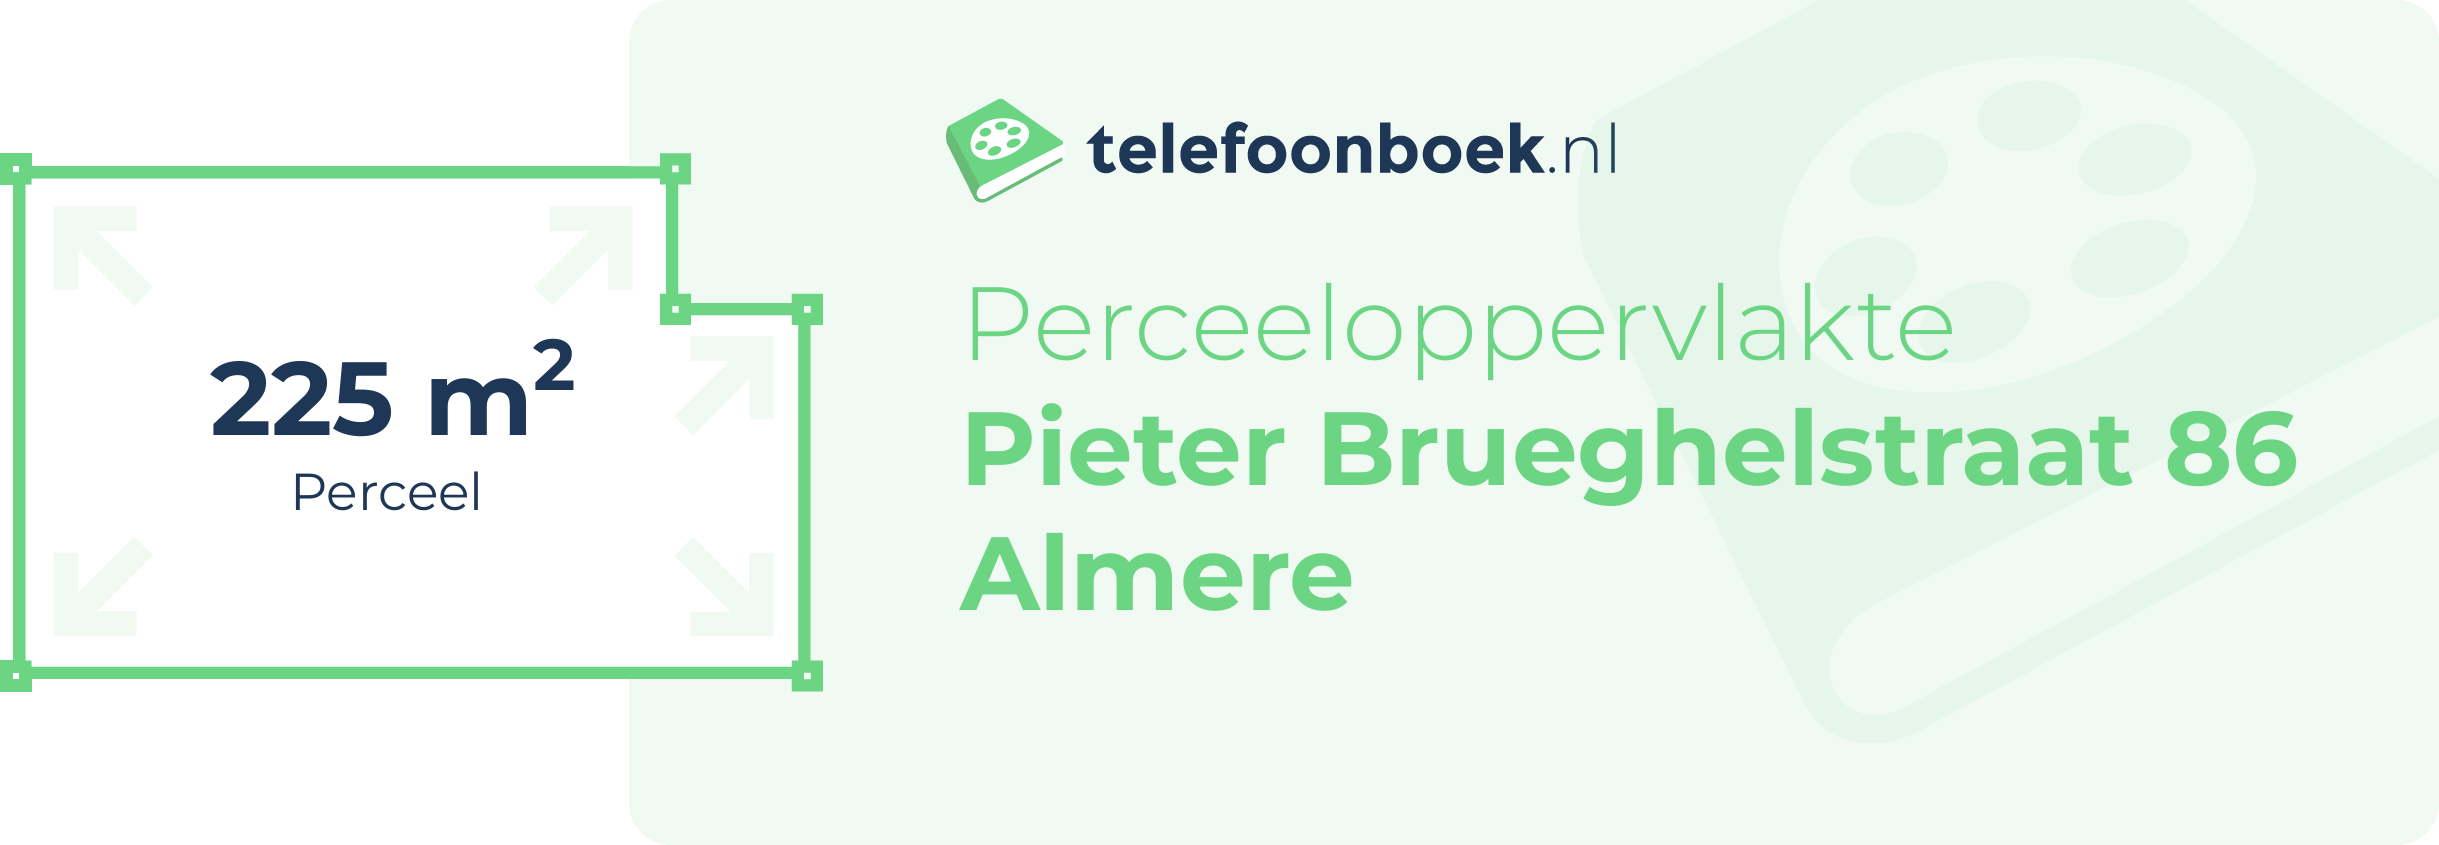 Perceeloppervlakte Pieter Brueghelstraat 86 Almere